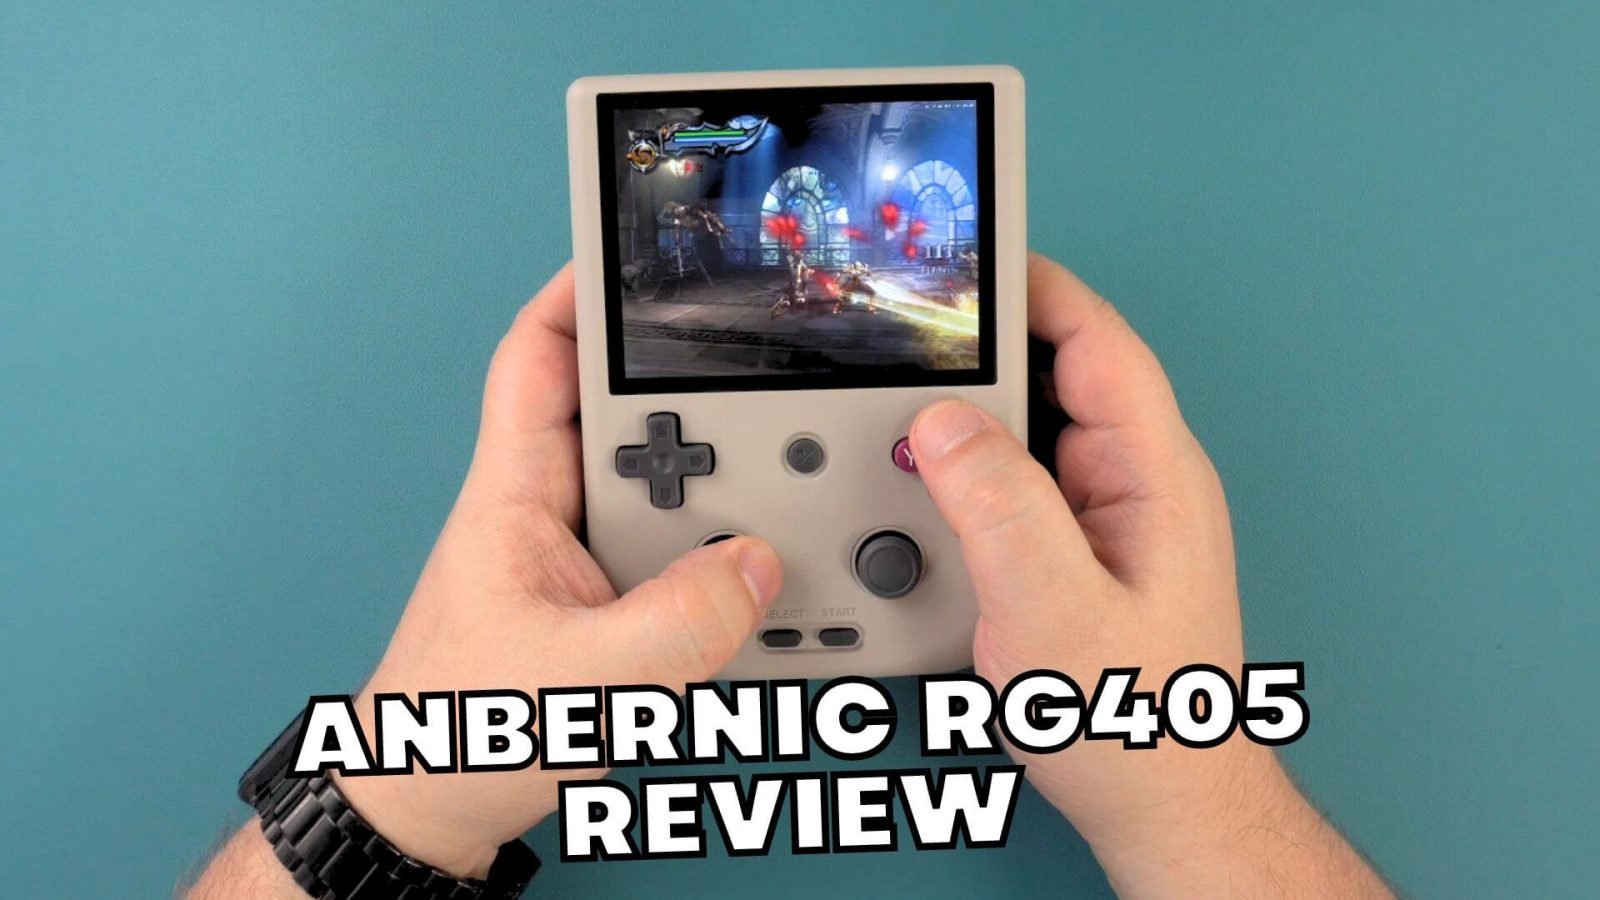 Anbernic RG405V Review - Tiger T618 Android retroid gaming handheld emulator